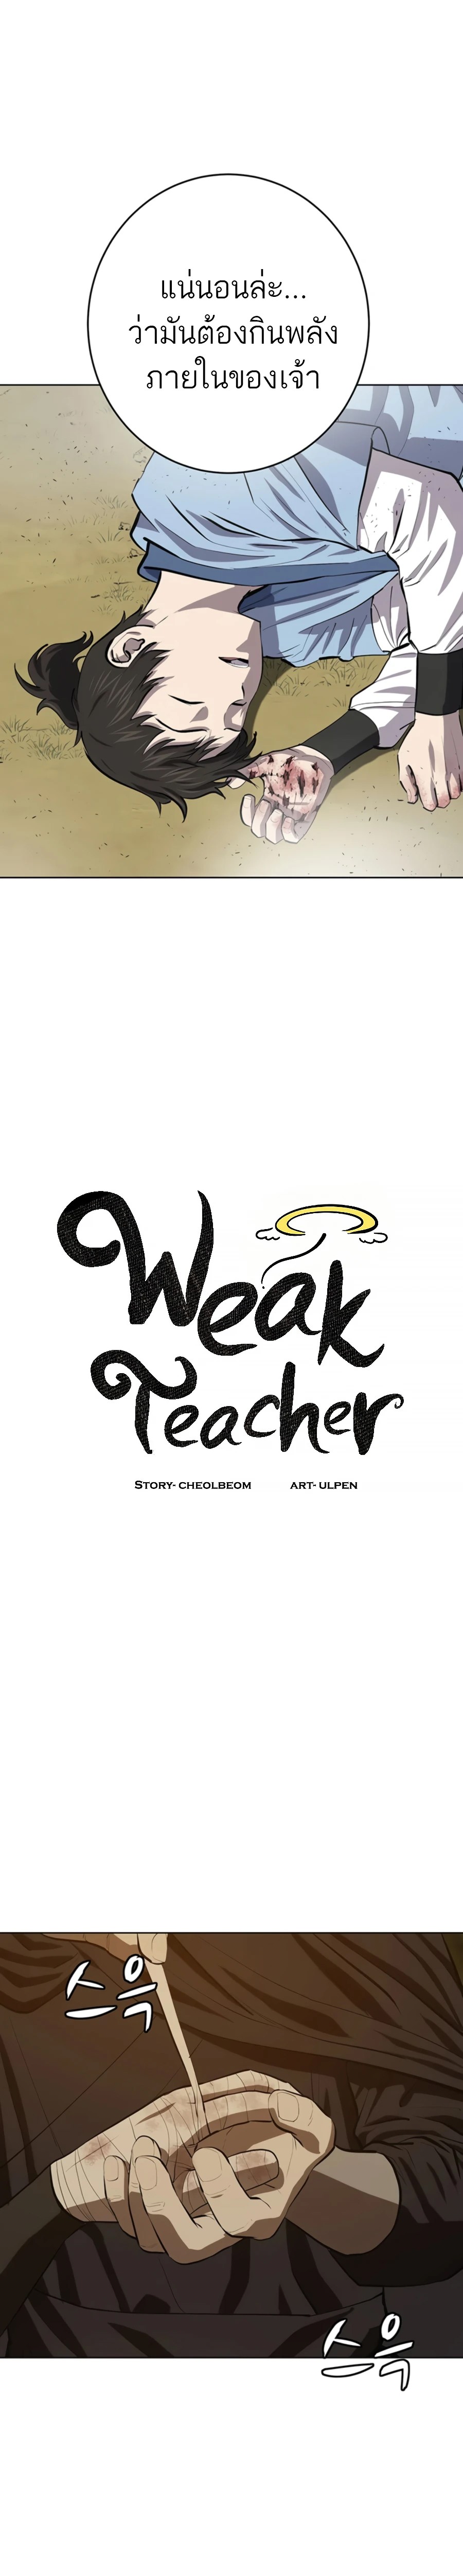 weak-teacher-77-10.jpg